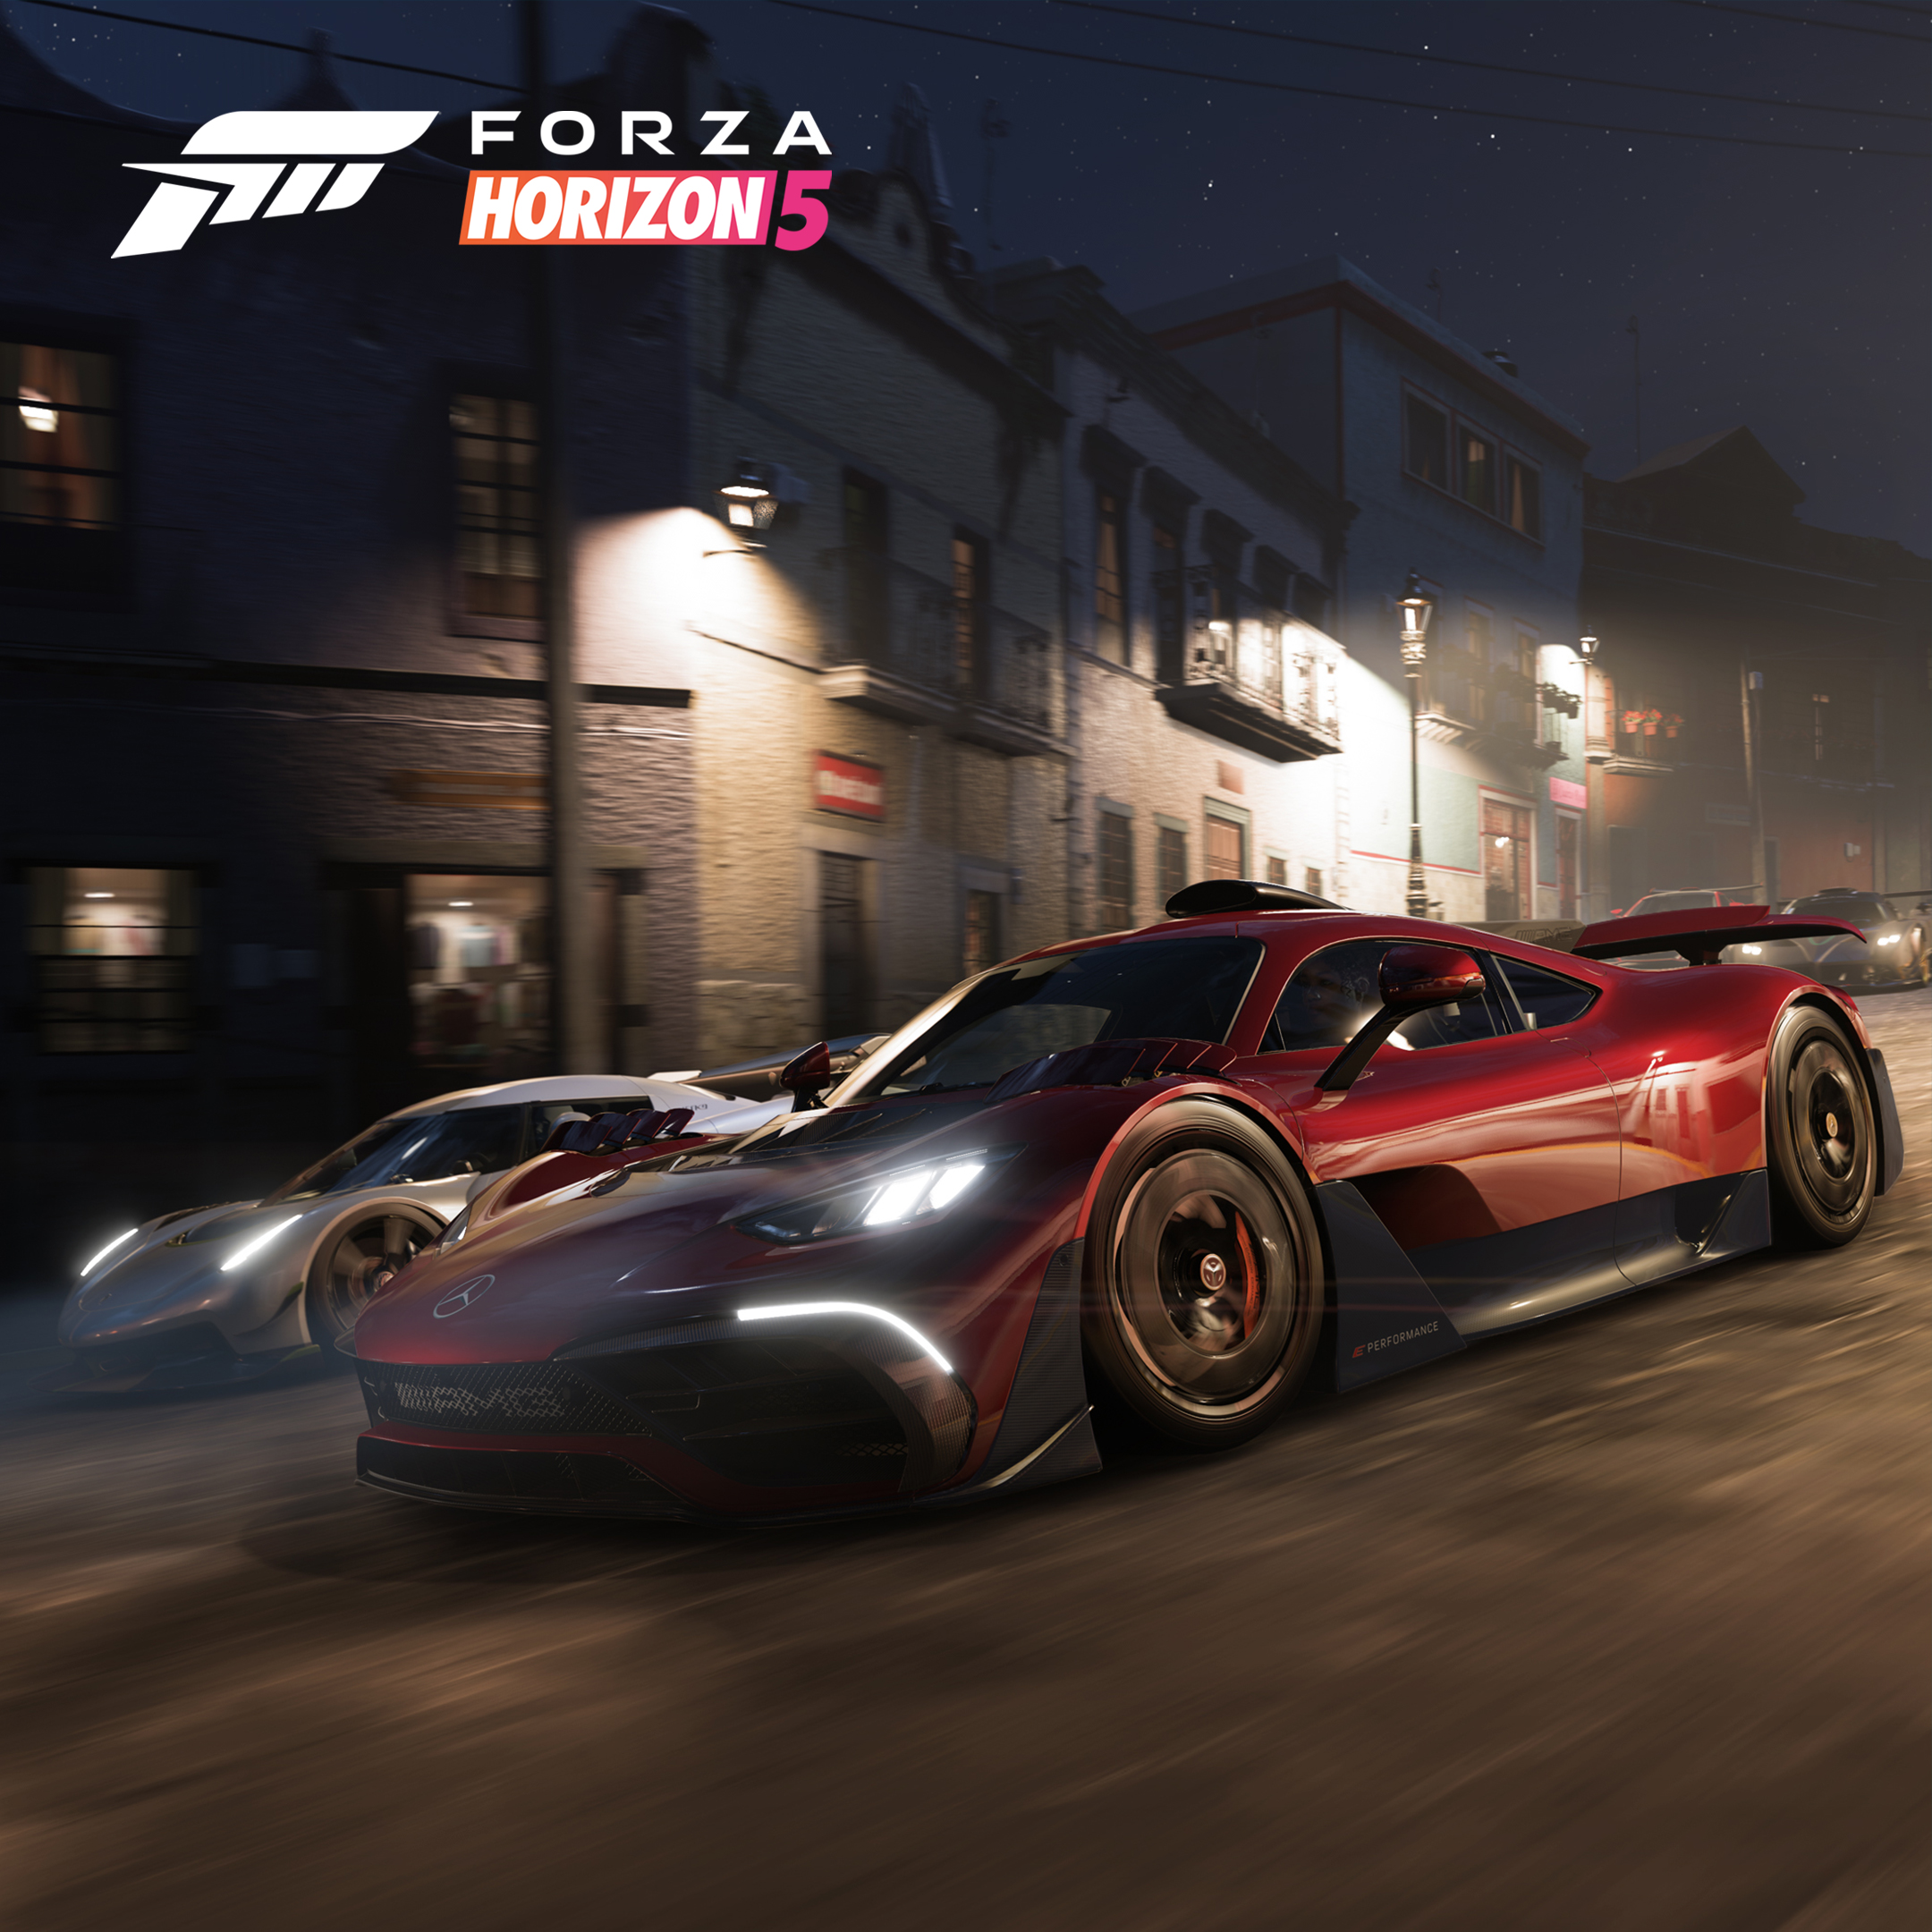 Forza Horizon 5 at gamescom